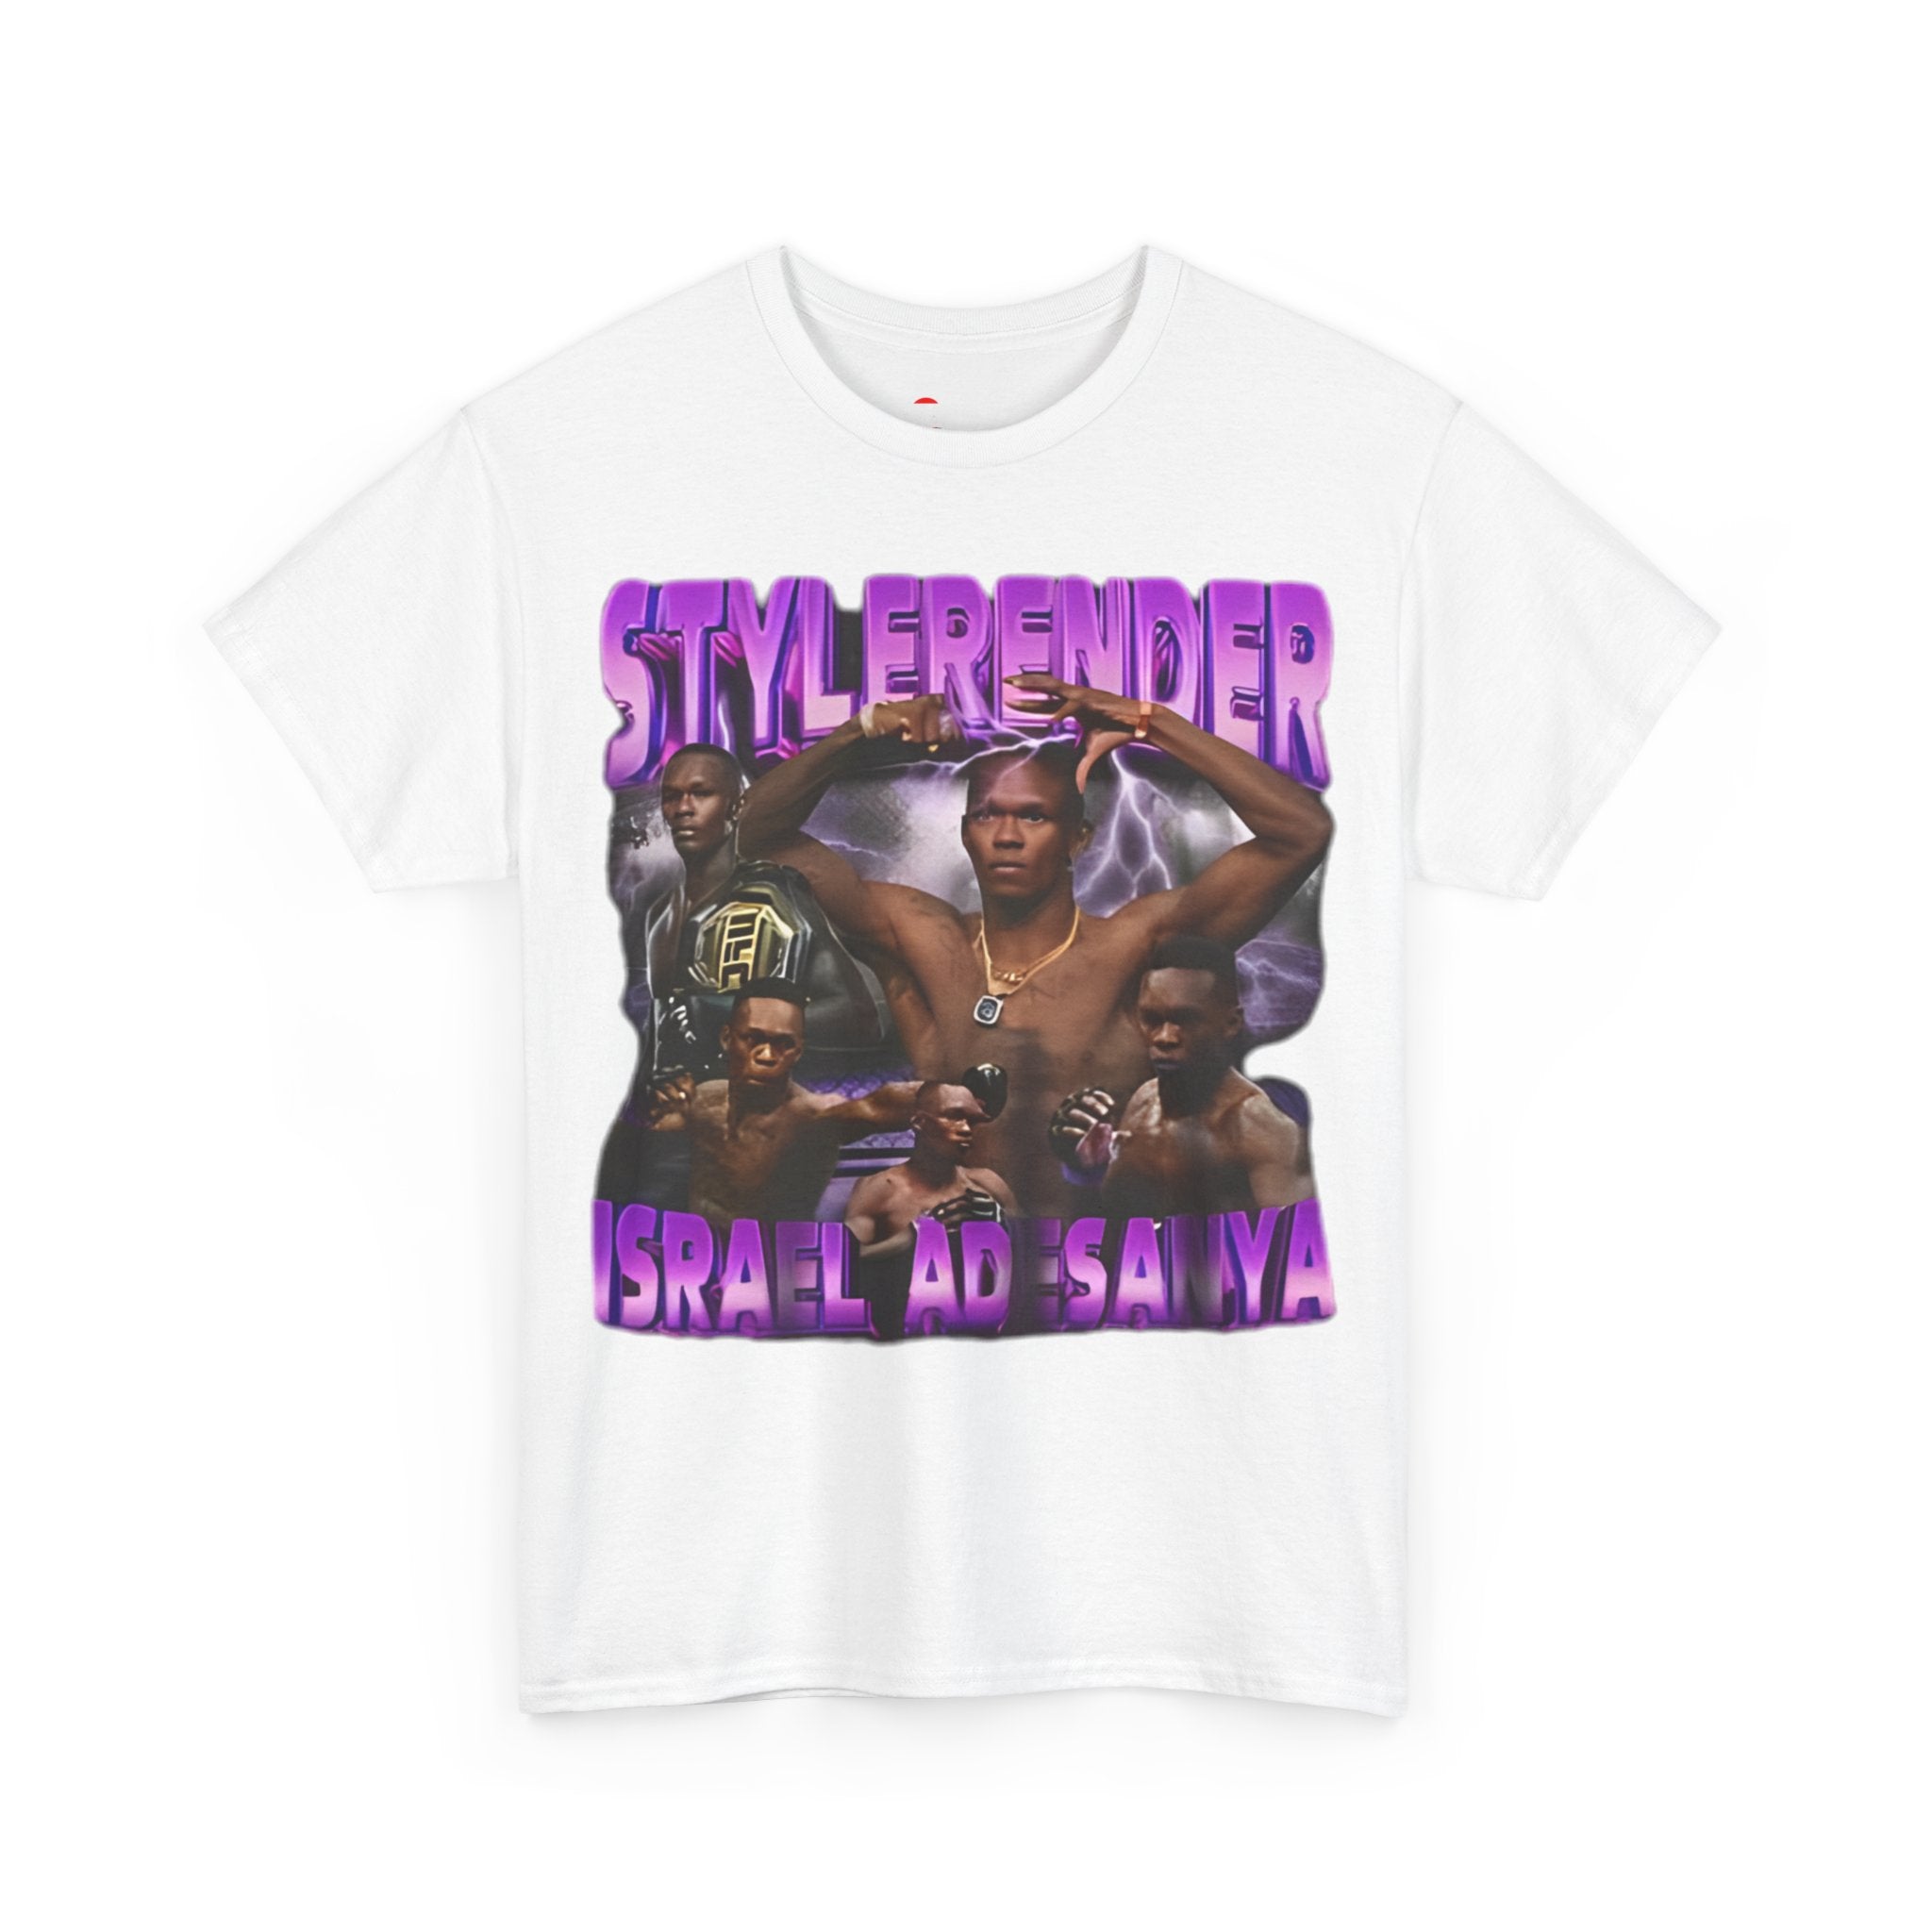 Izzy "Style Bender" T-shirt